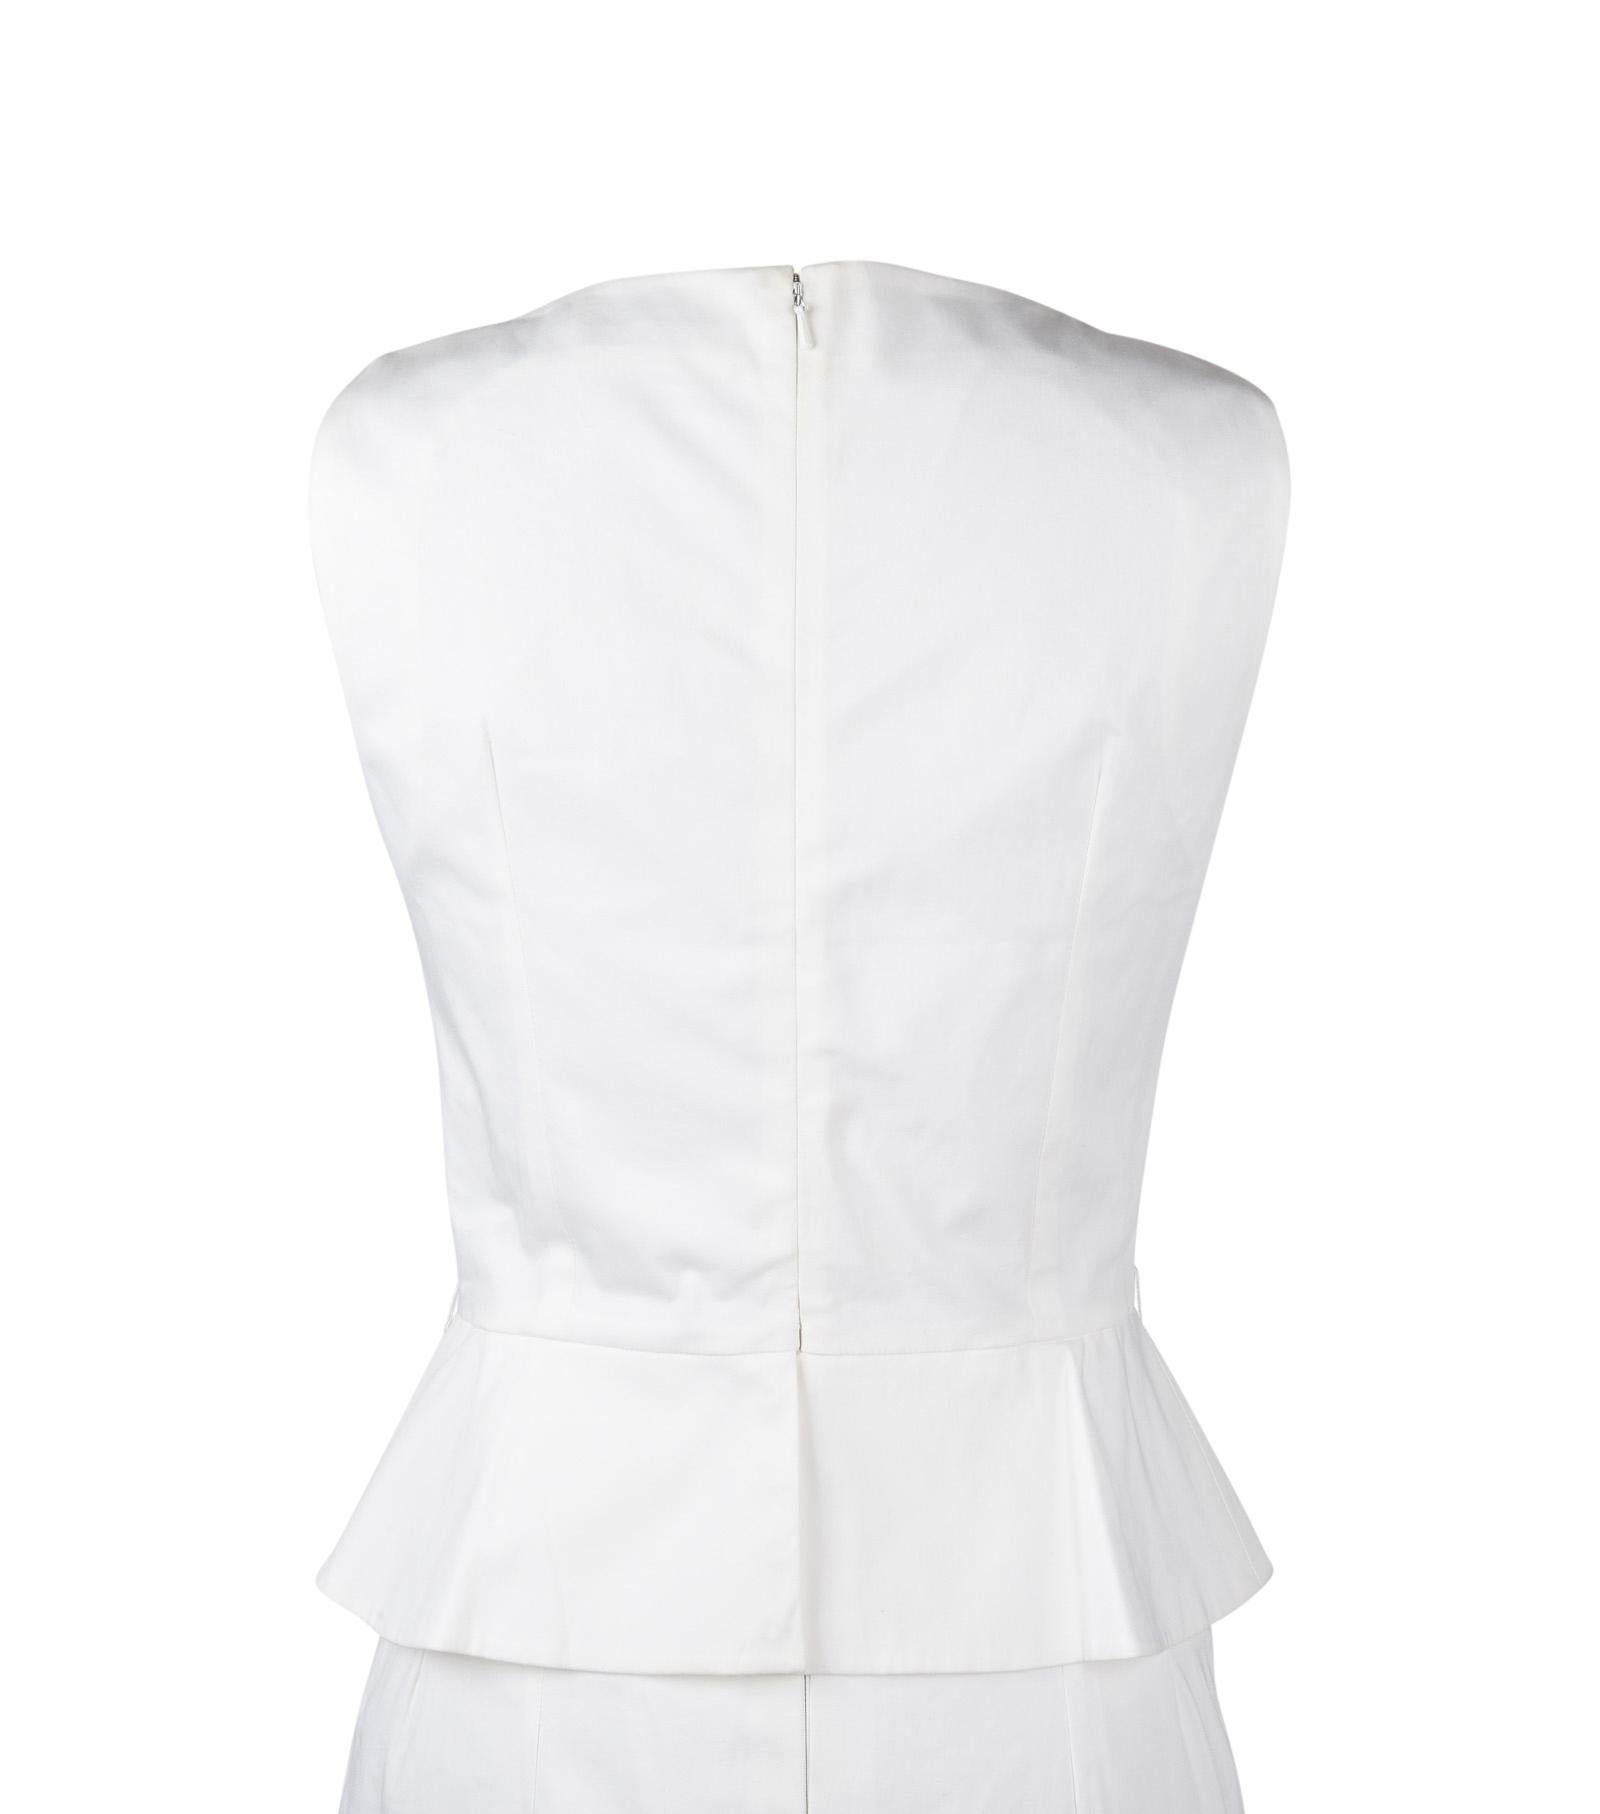 Women's Christian Dior Dress White Cotton Peplum 8 Mint 